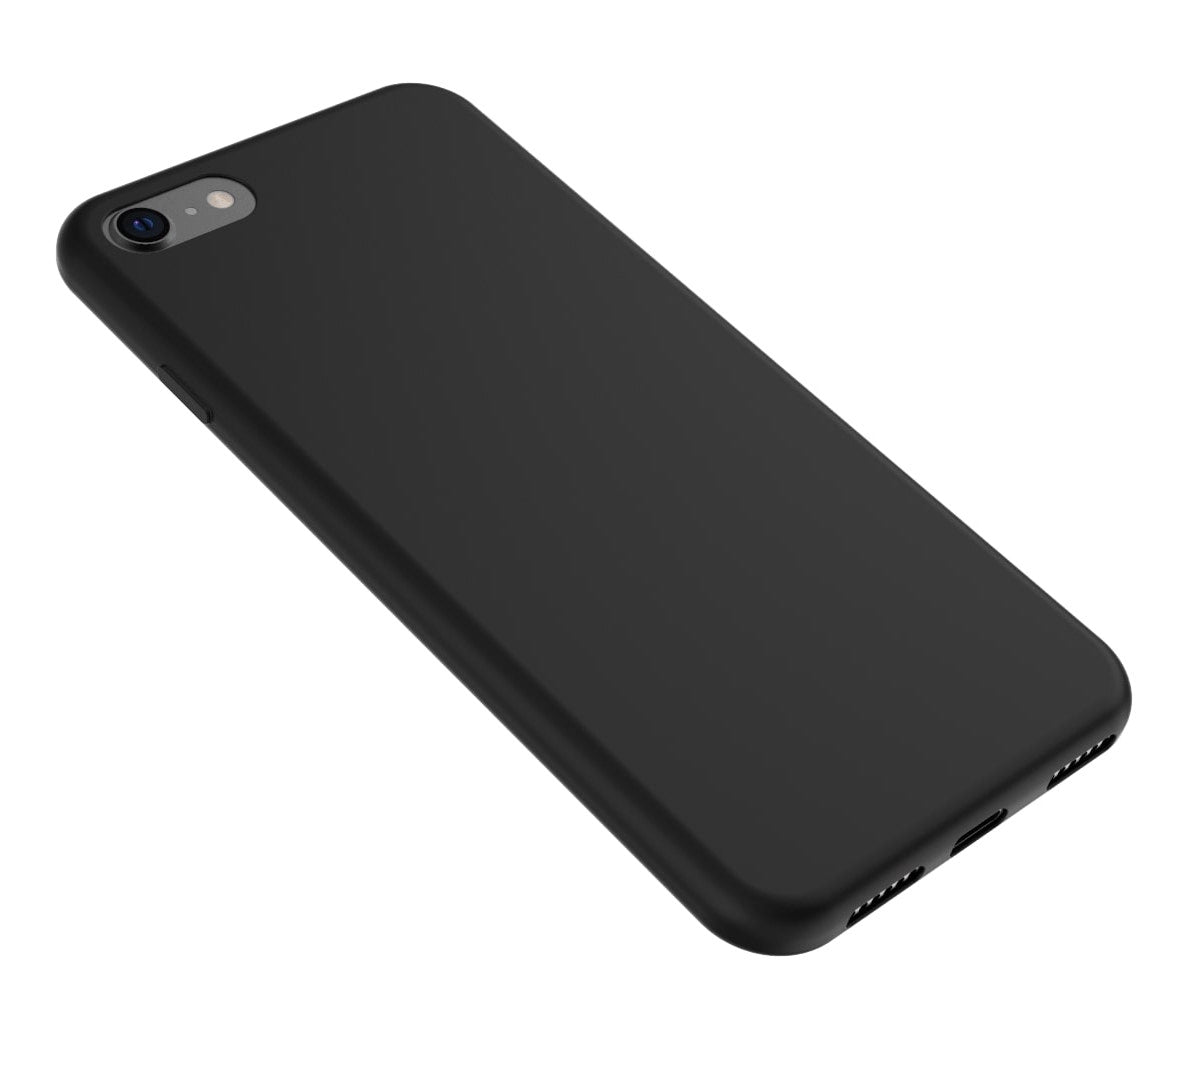 iPhone 6 Suojakuori – musta